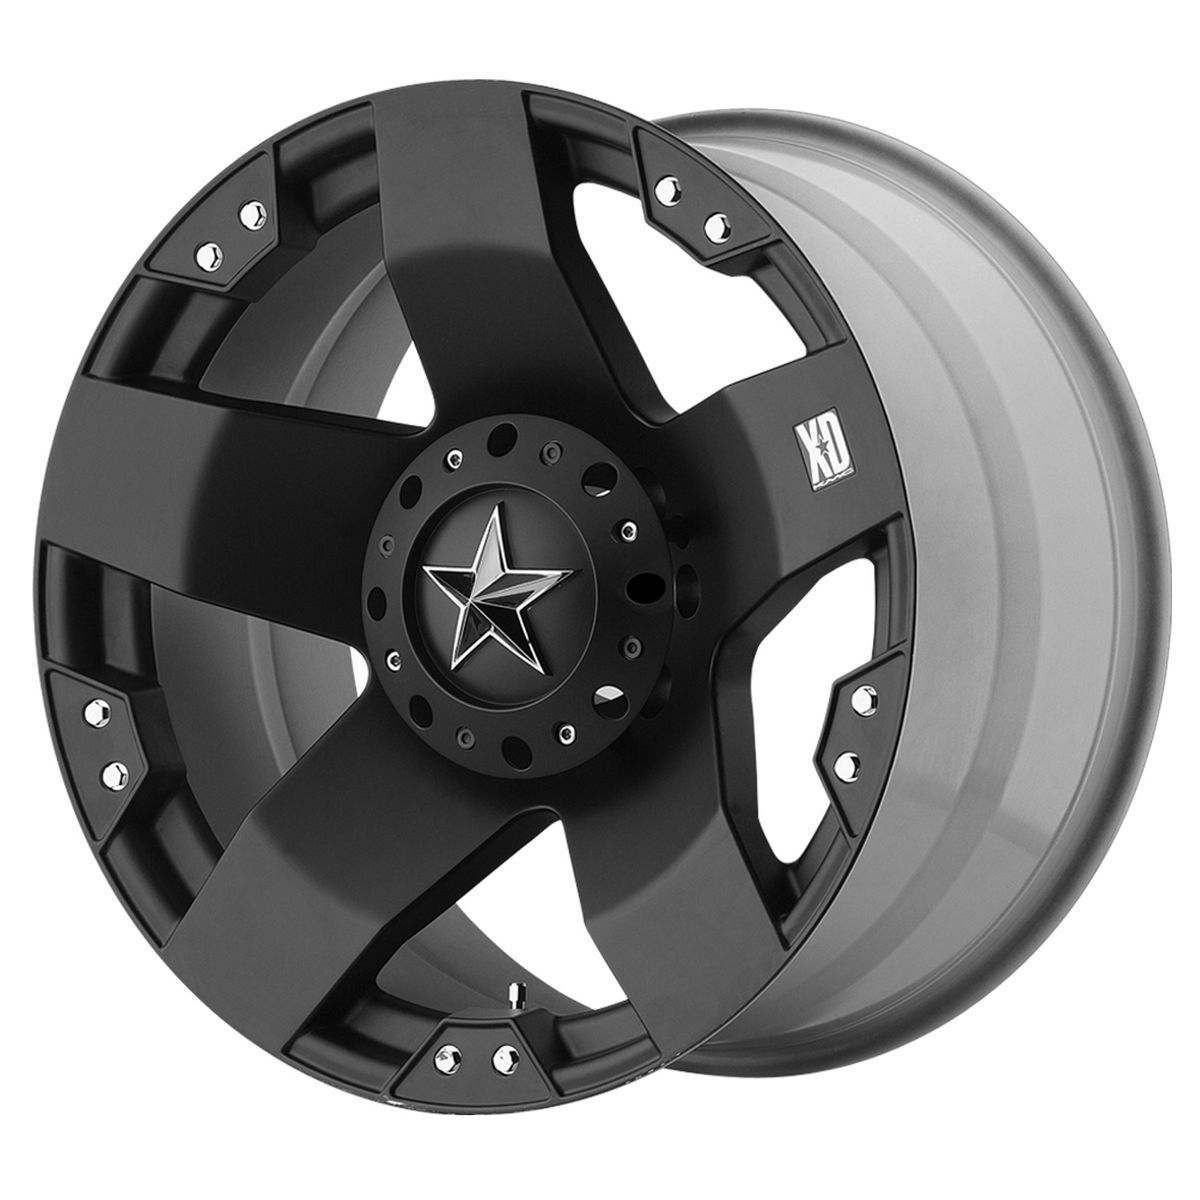 Black wheels rims KMC XD 775 Rockstar Jeep Wrangler 2007 2013 only 5x5